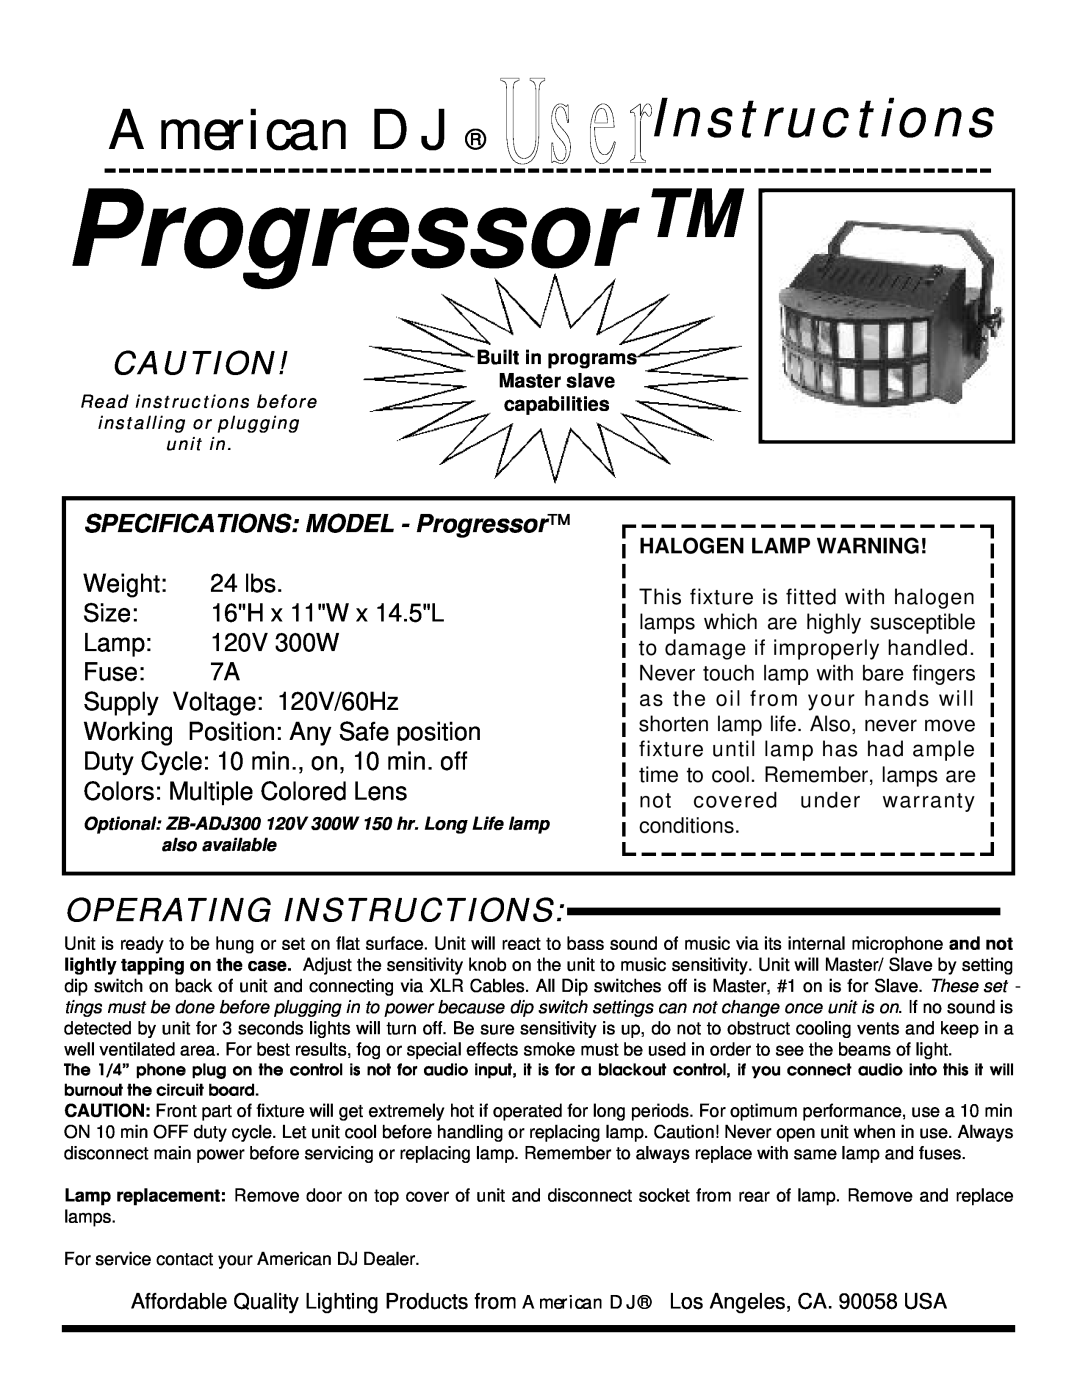 American DJ Progressor specifications American DJ UserInstructions, Operating Instructions 